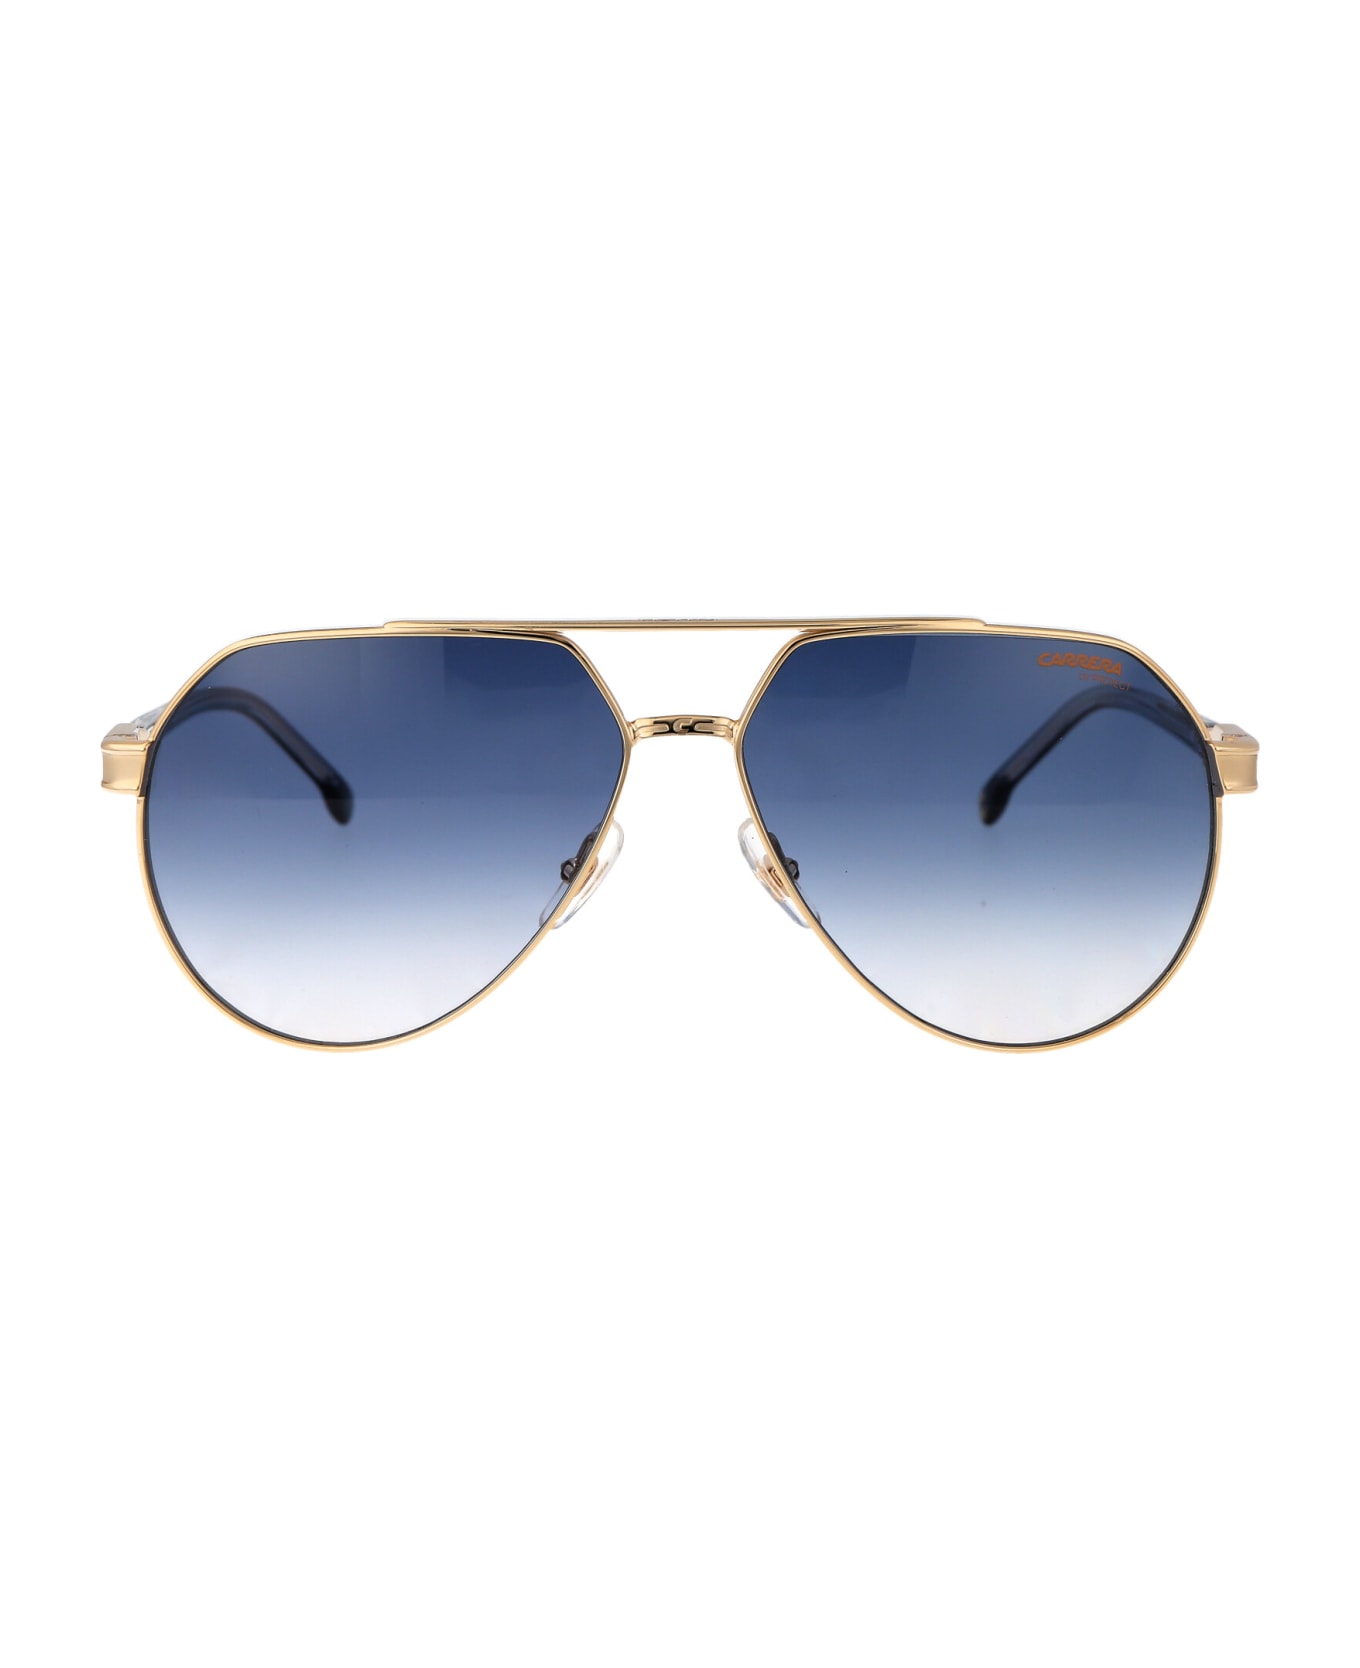 Carrera 1067/s Sunglasses - J5G08 GOLD サングラス